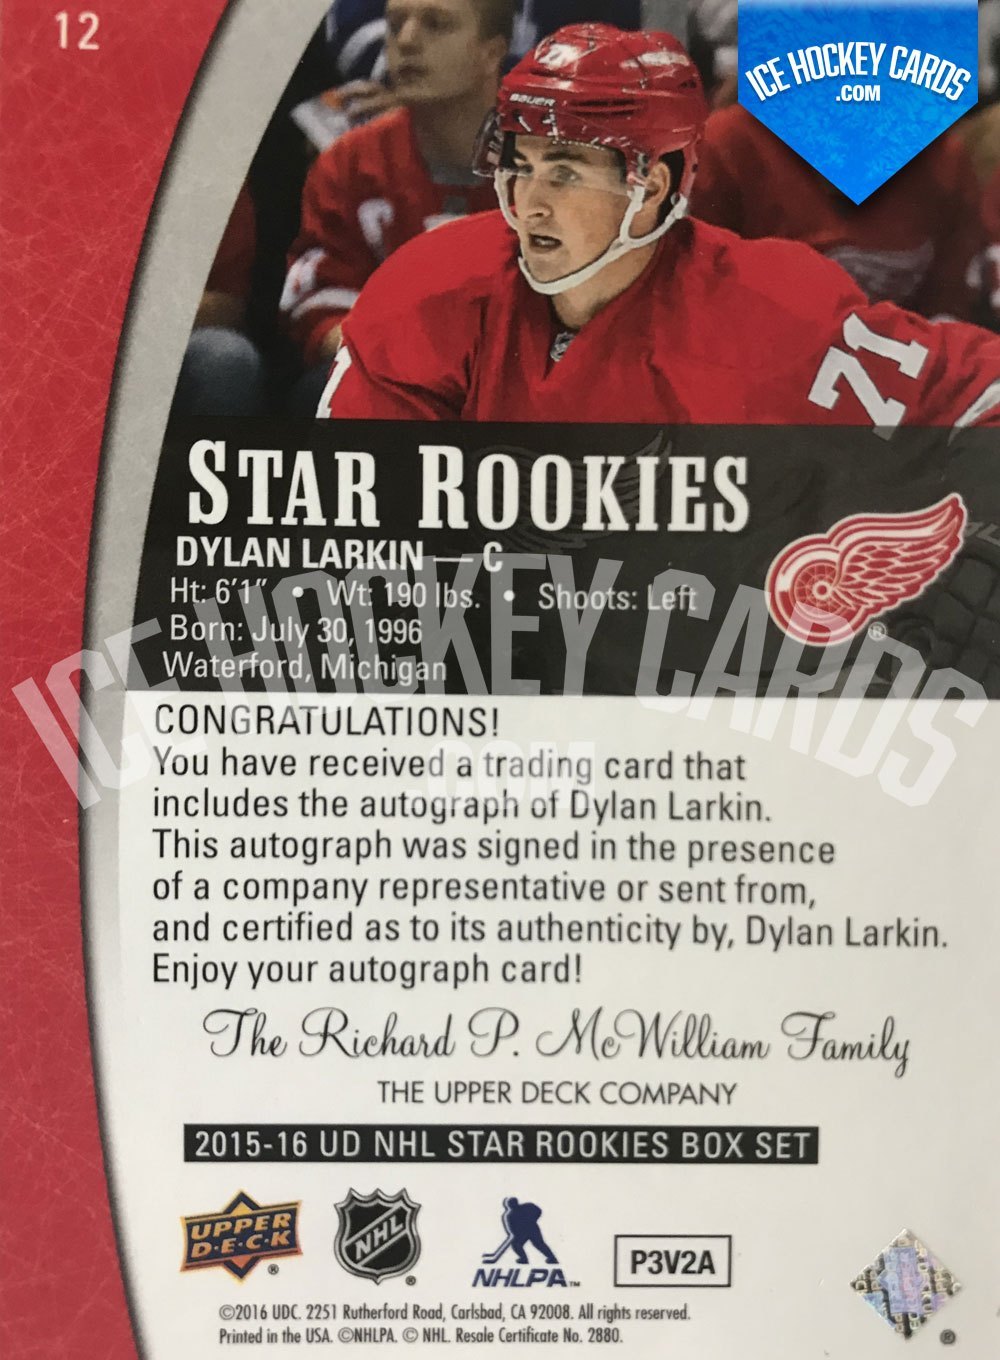 Upper Deck - Star Rookies 15-16 - Dylan Larkin Autograph Rookie Card back